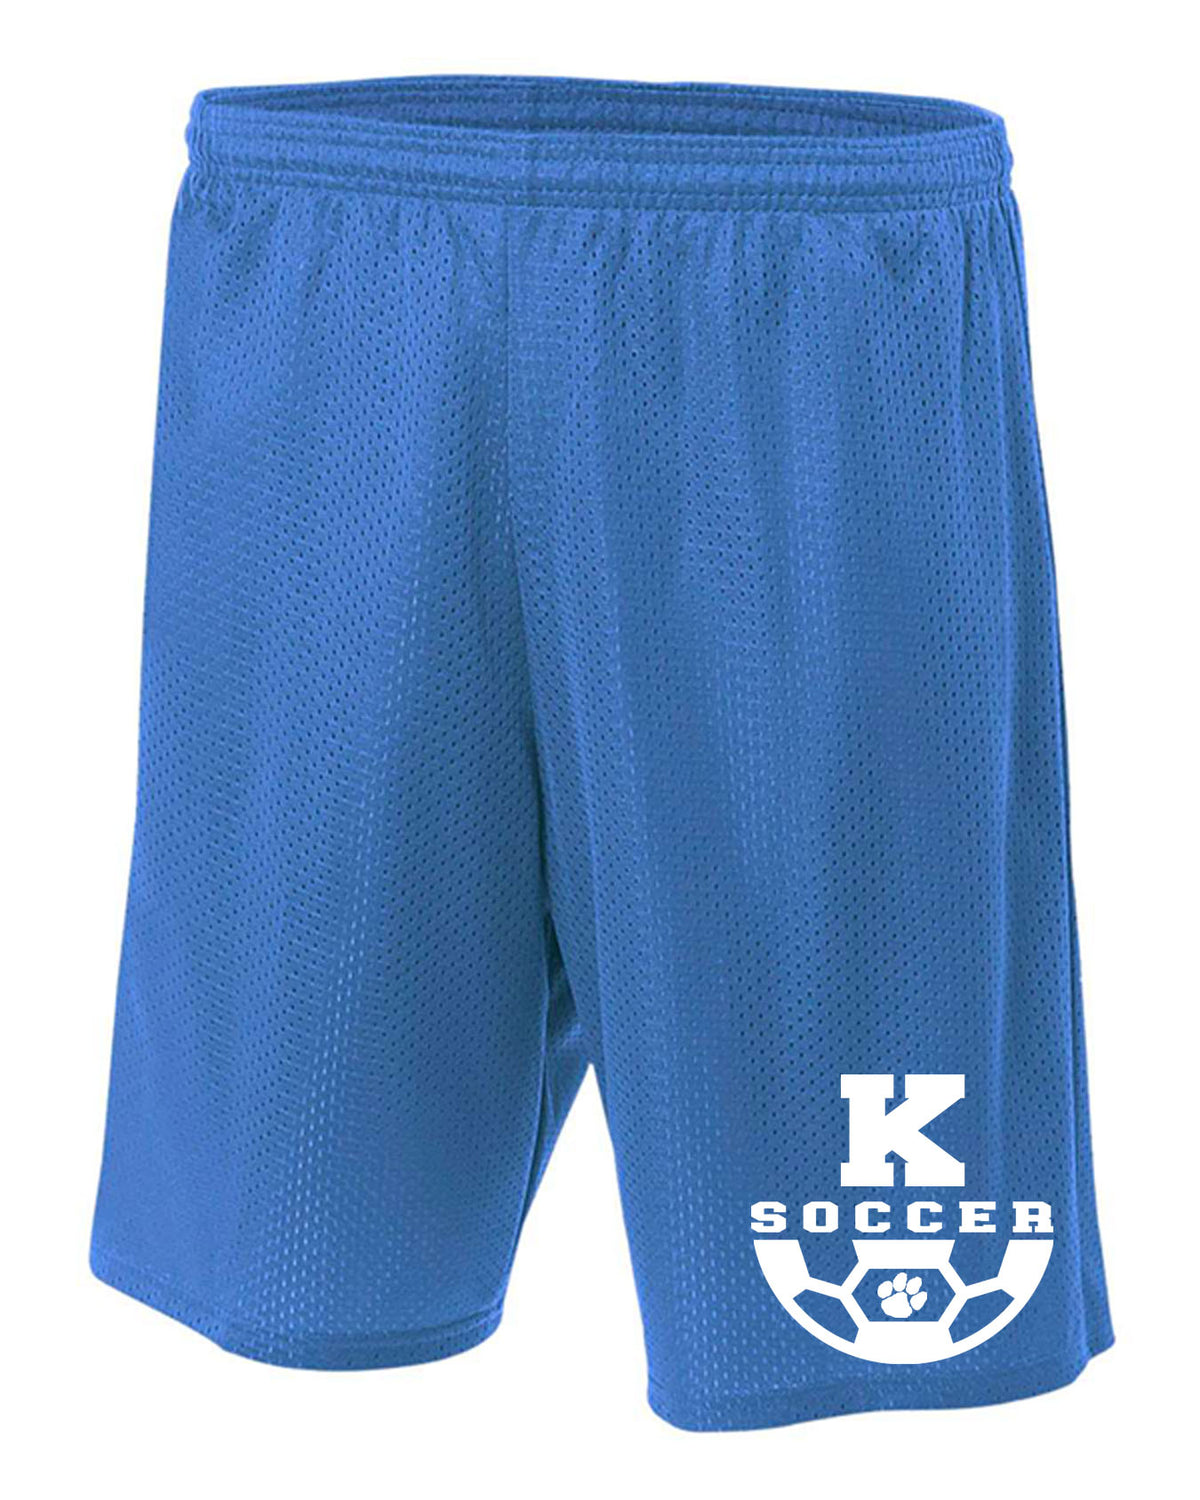 Kittatinny Soccer Design 4 Mesh Shorts